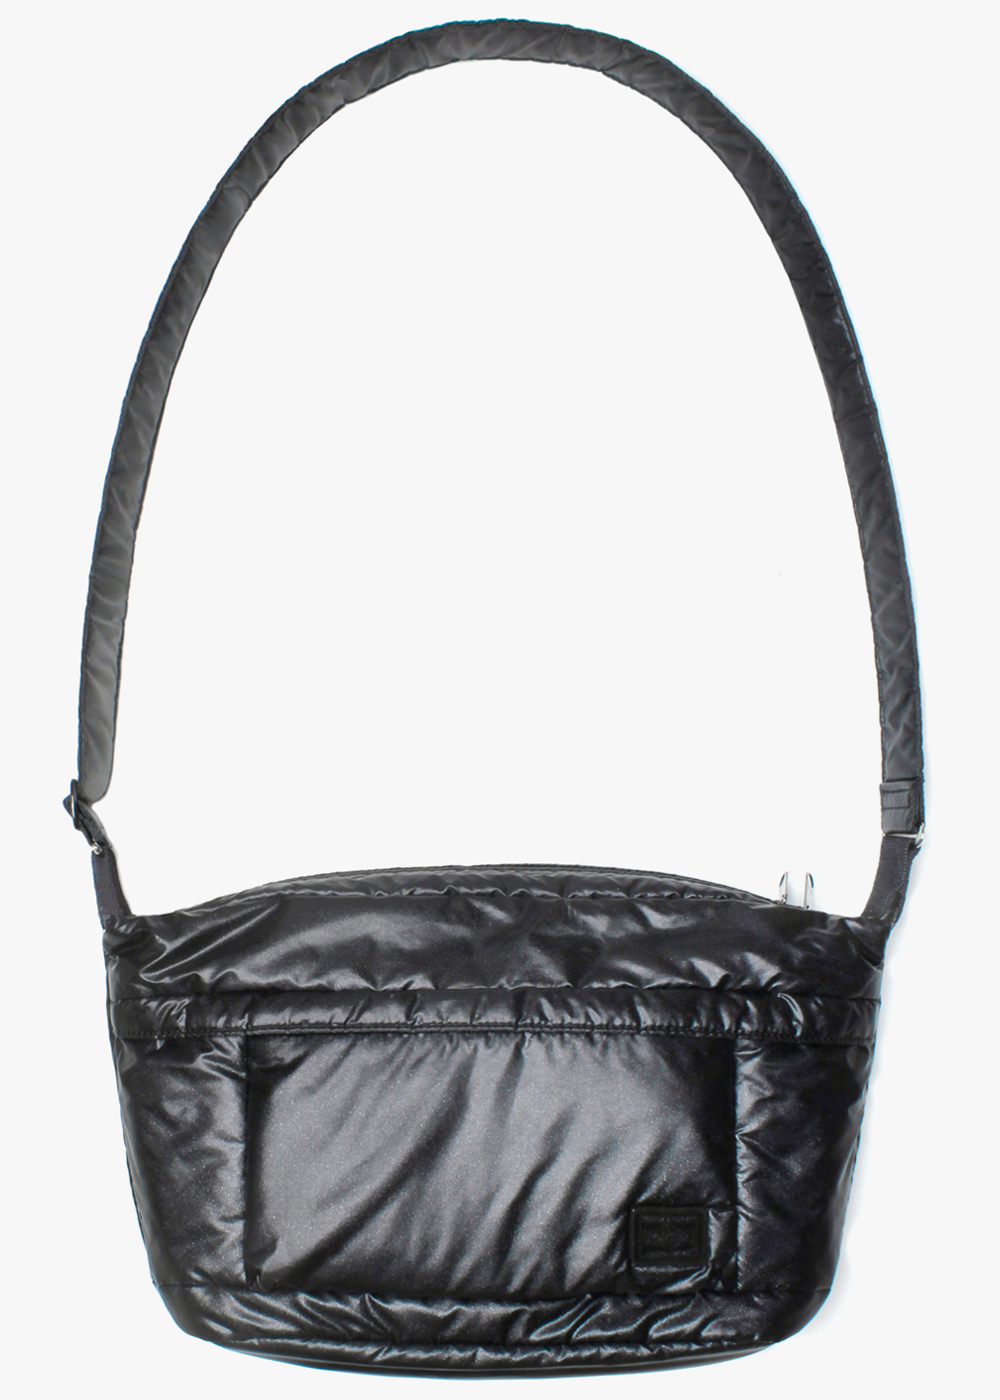 PORTERnylon shoulder bag